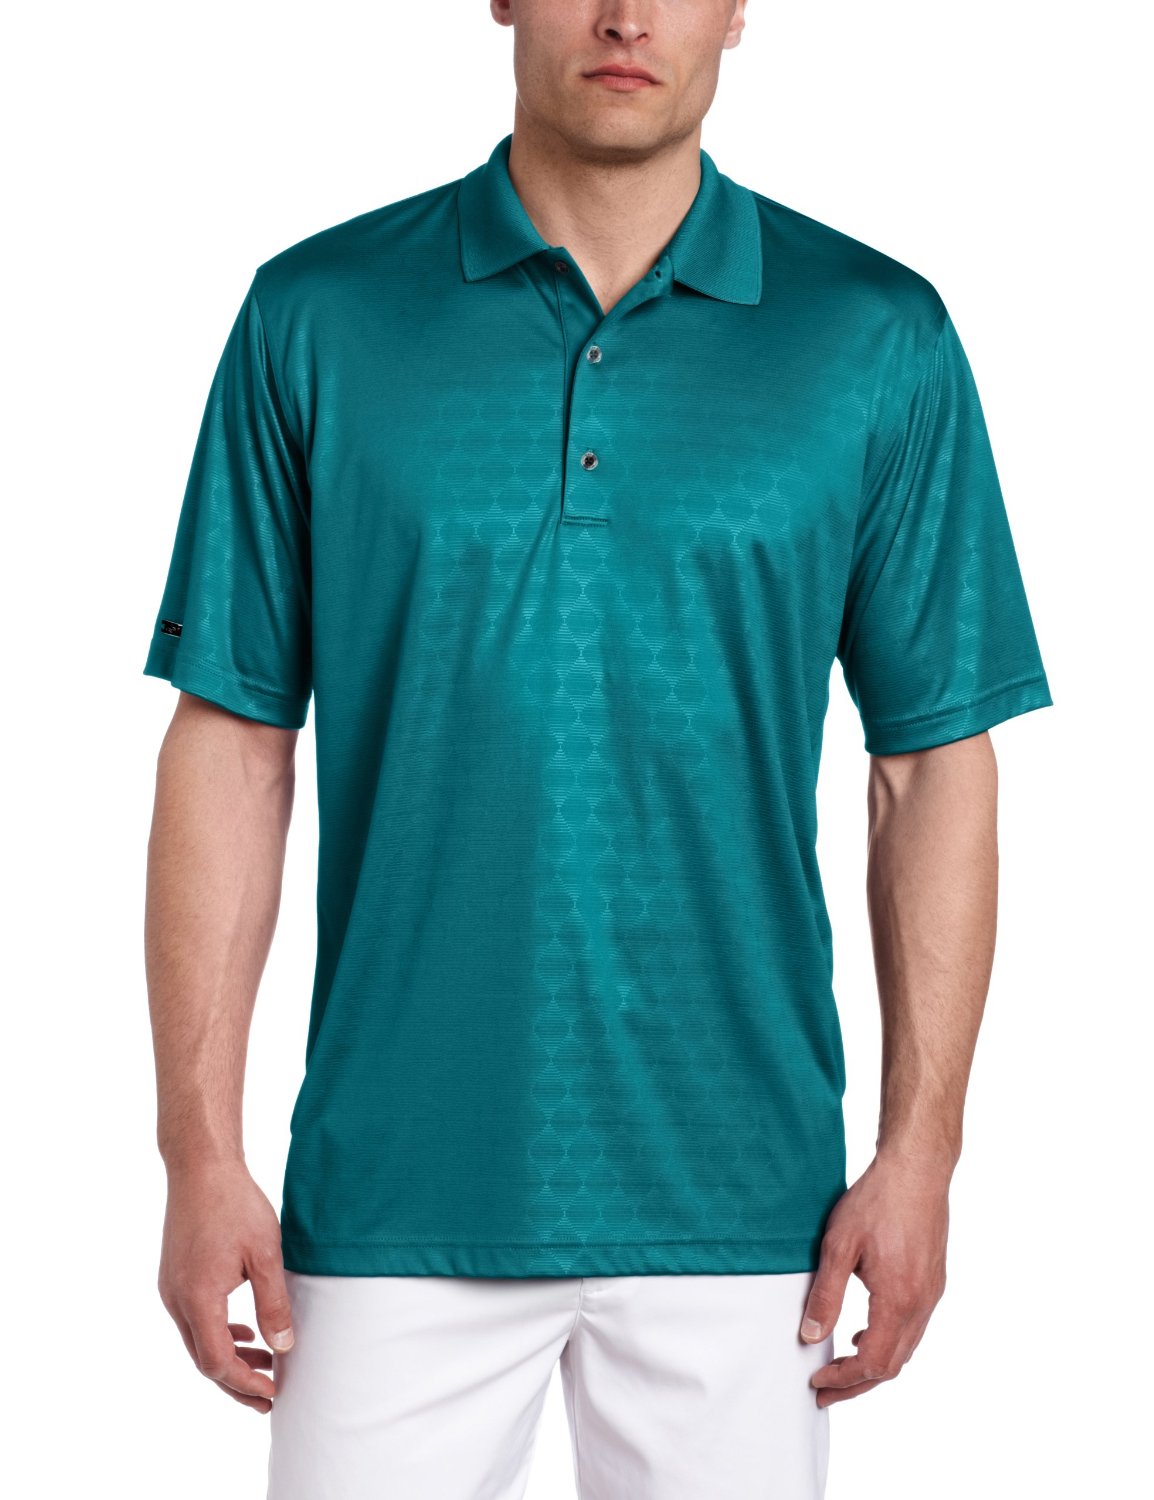 Greg Norman Mens Royal Embossed Golf Shirts